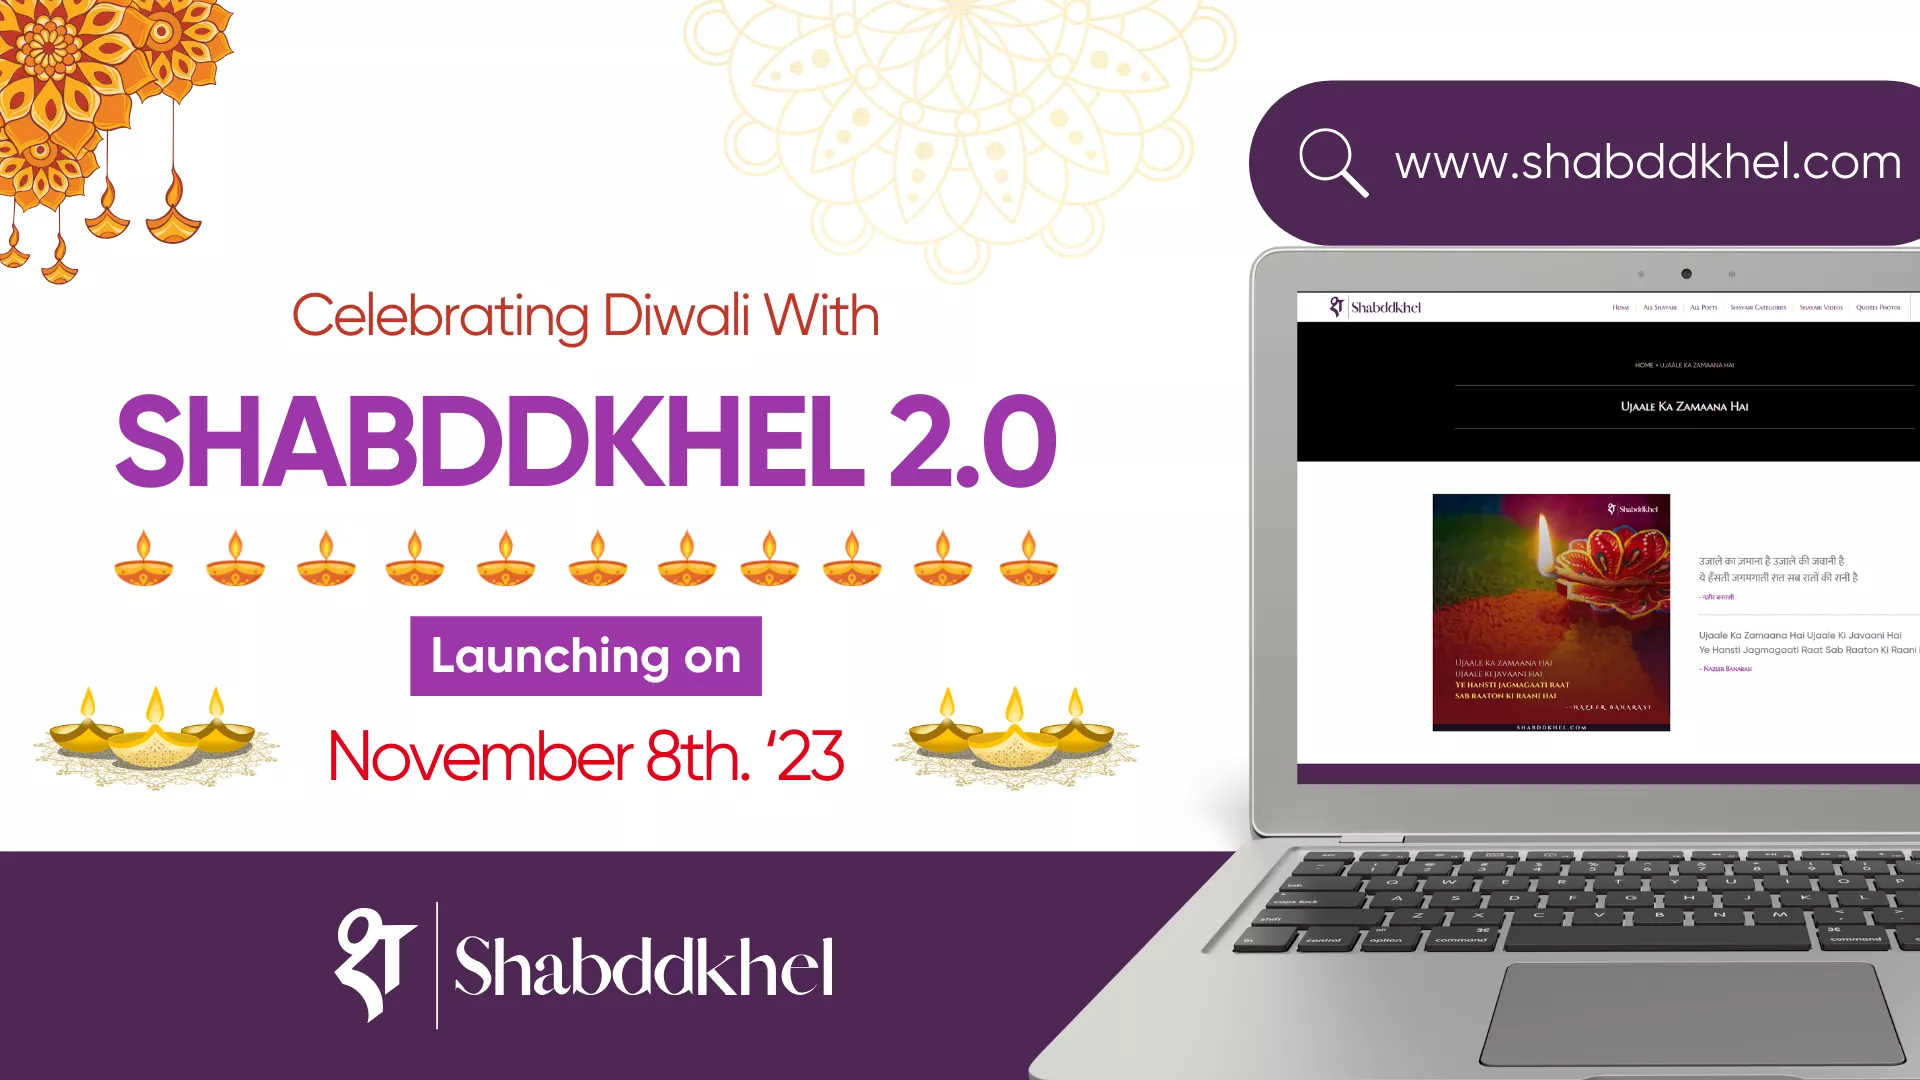 Shabddkhel 2_0 launching on 8th november 2023